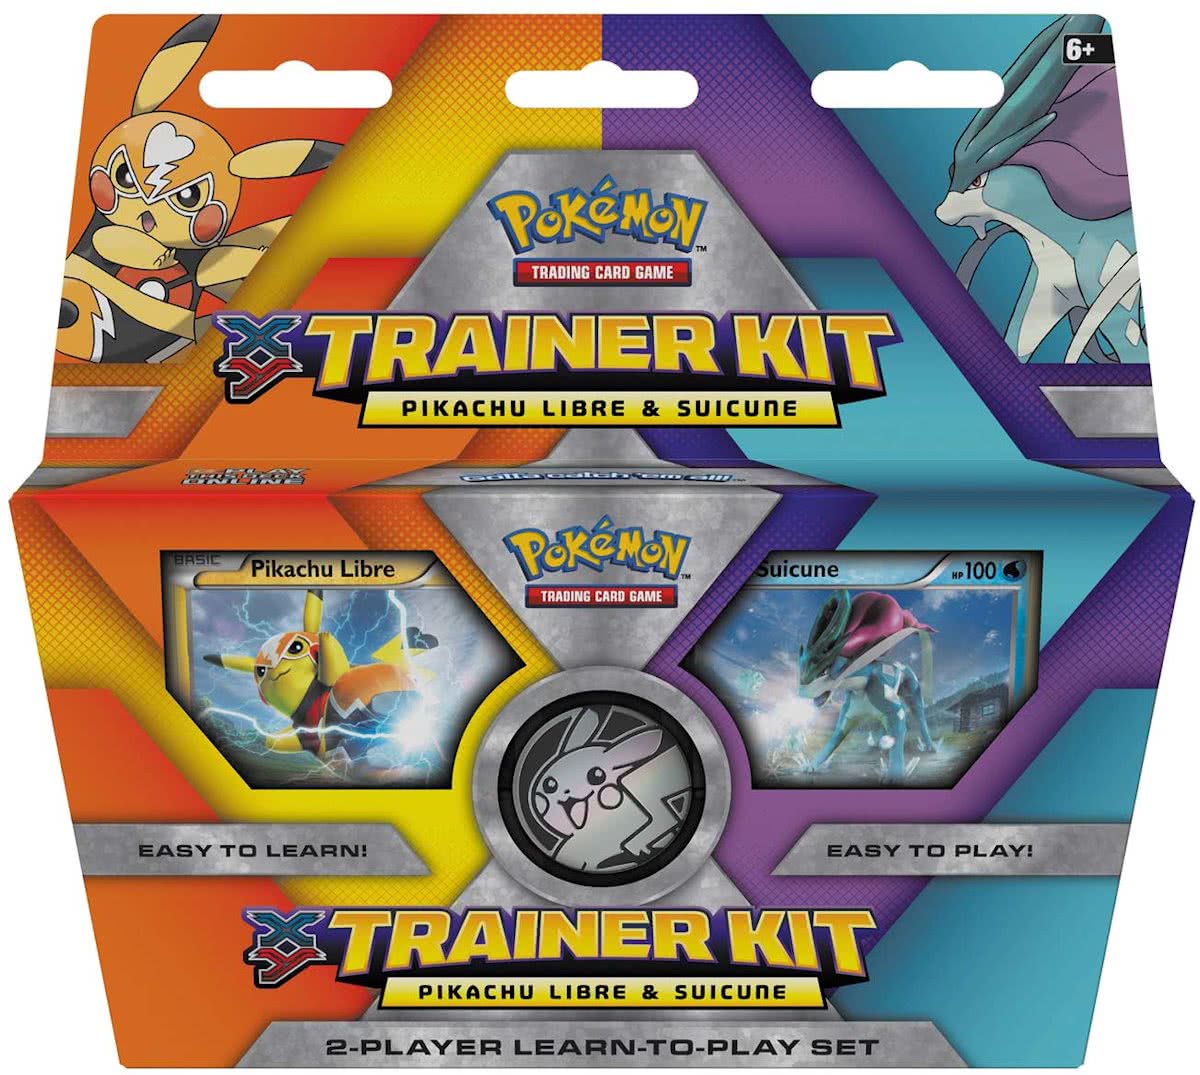 Pokemon Trainer Kit: Learn 2 Play Set met Pikachu Libre & Suicune (Pokemon), The Pokemon Company